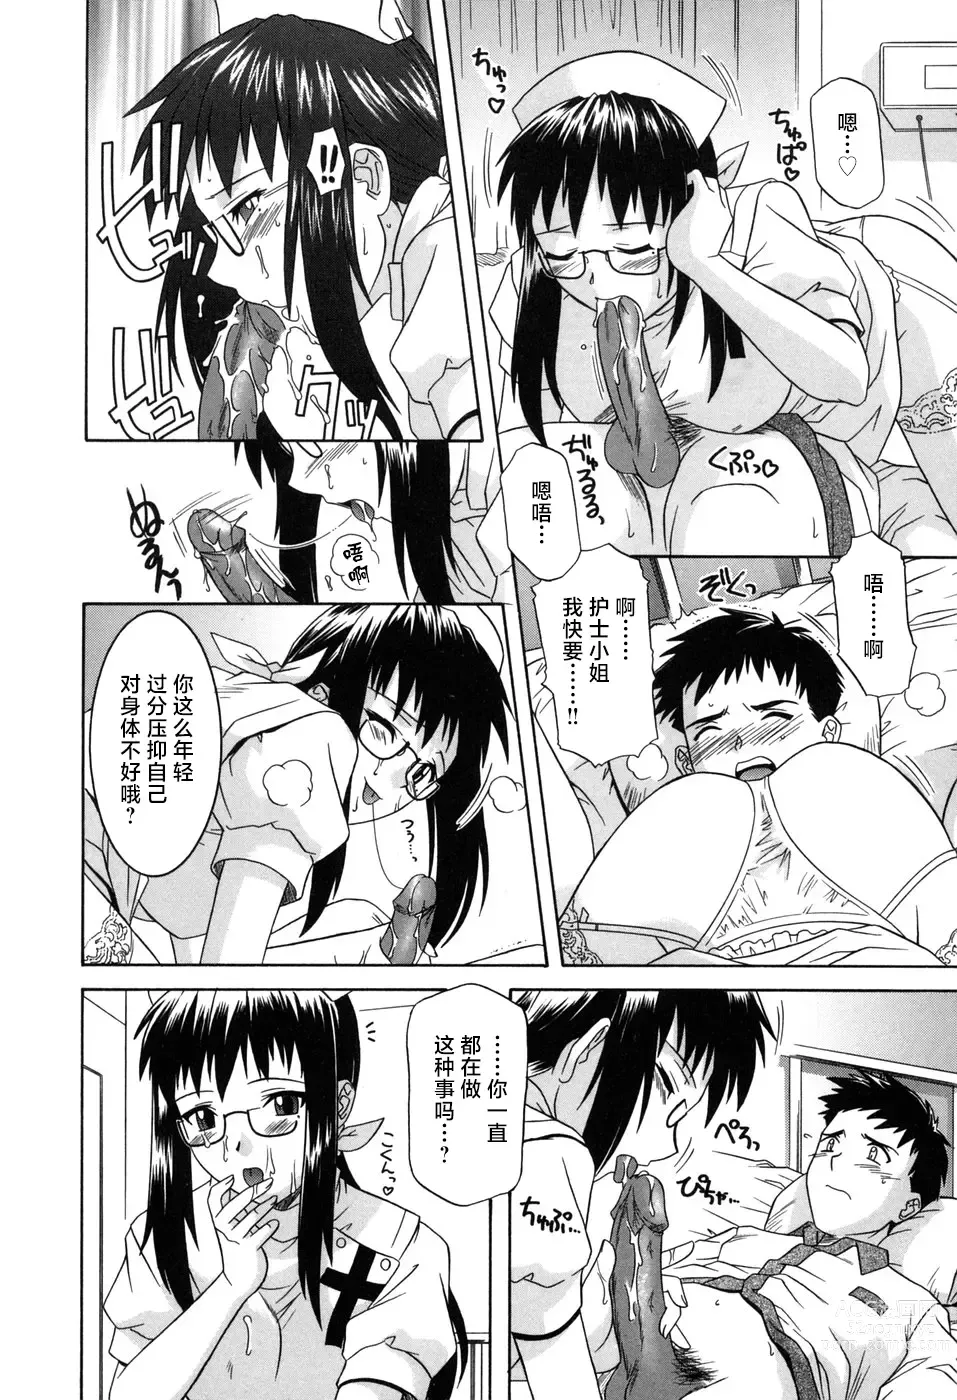 Page 148 of manga Sonoki ni Sasenaide - Please Dont make it the mind.